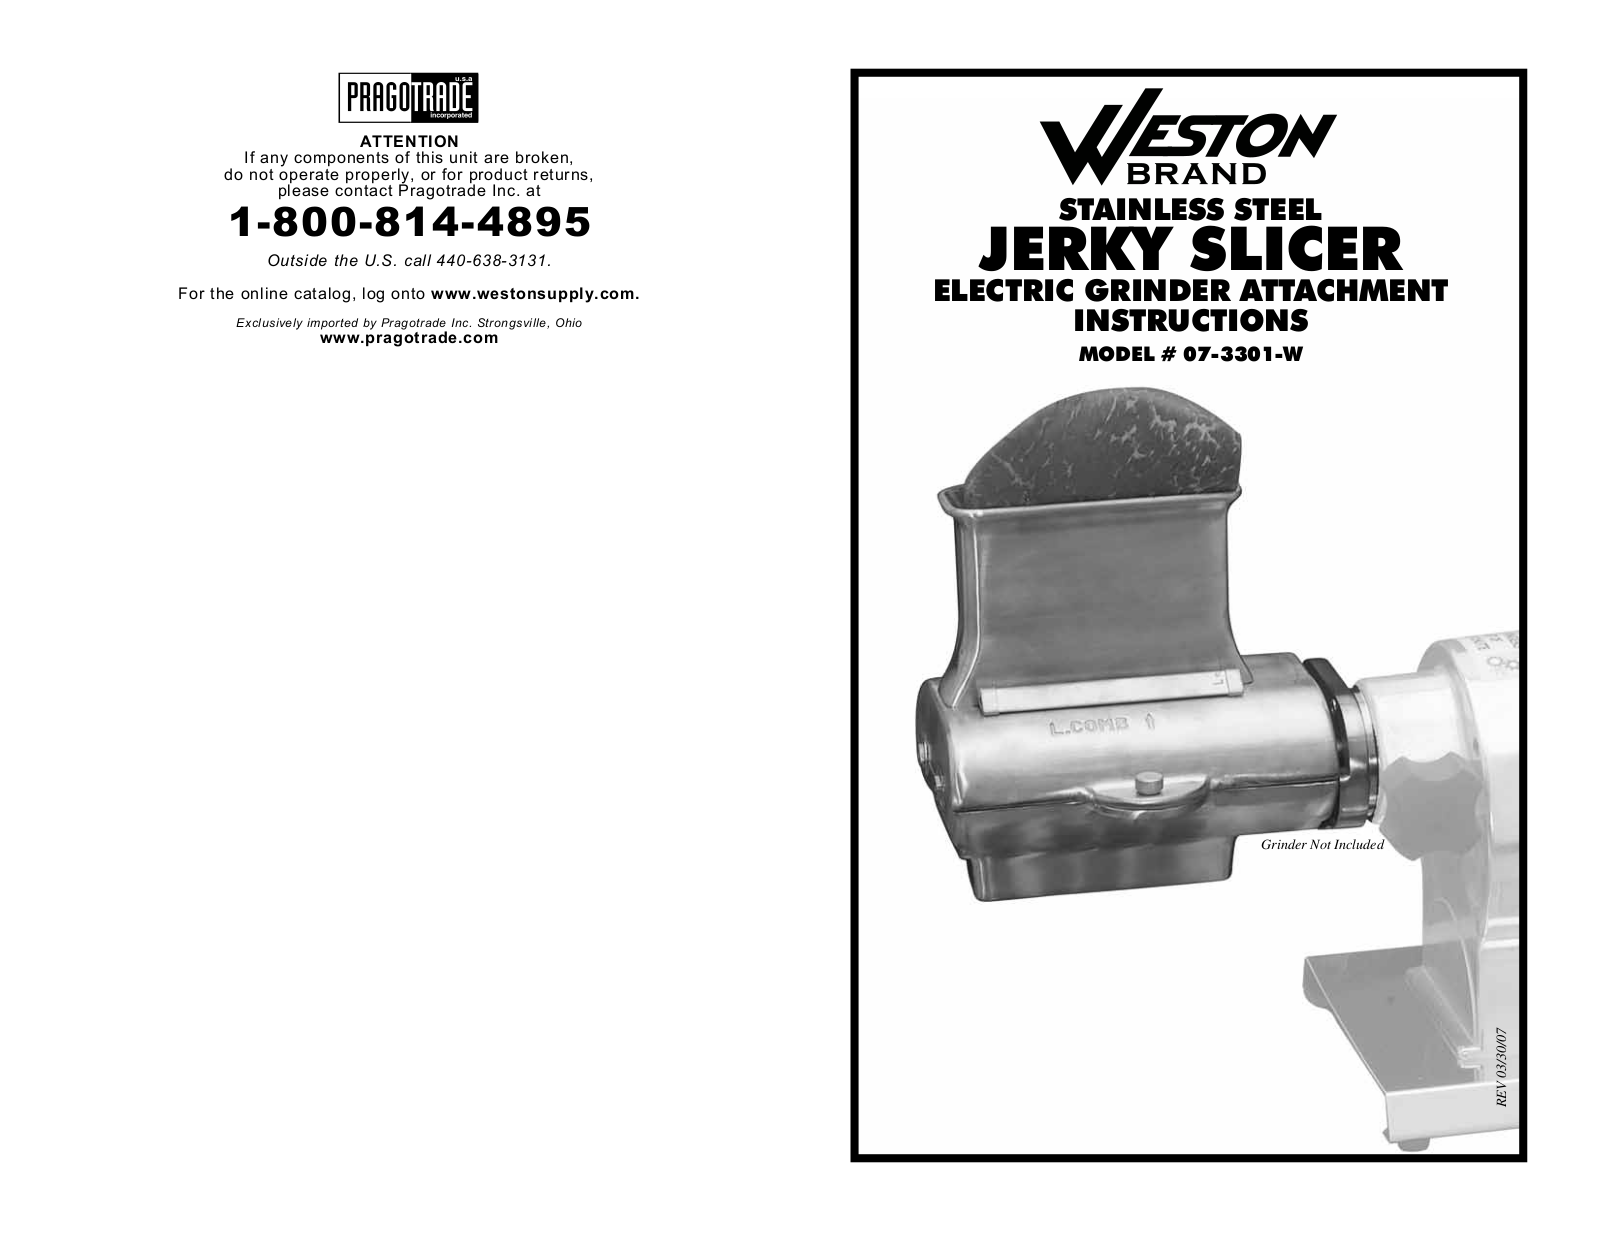 Weston Jerky Slicer Attachment User Manual